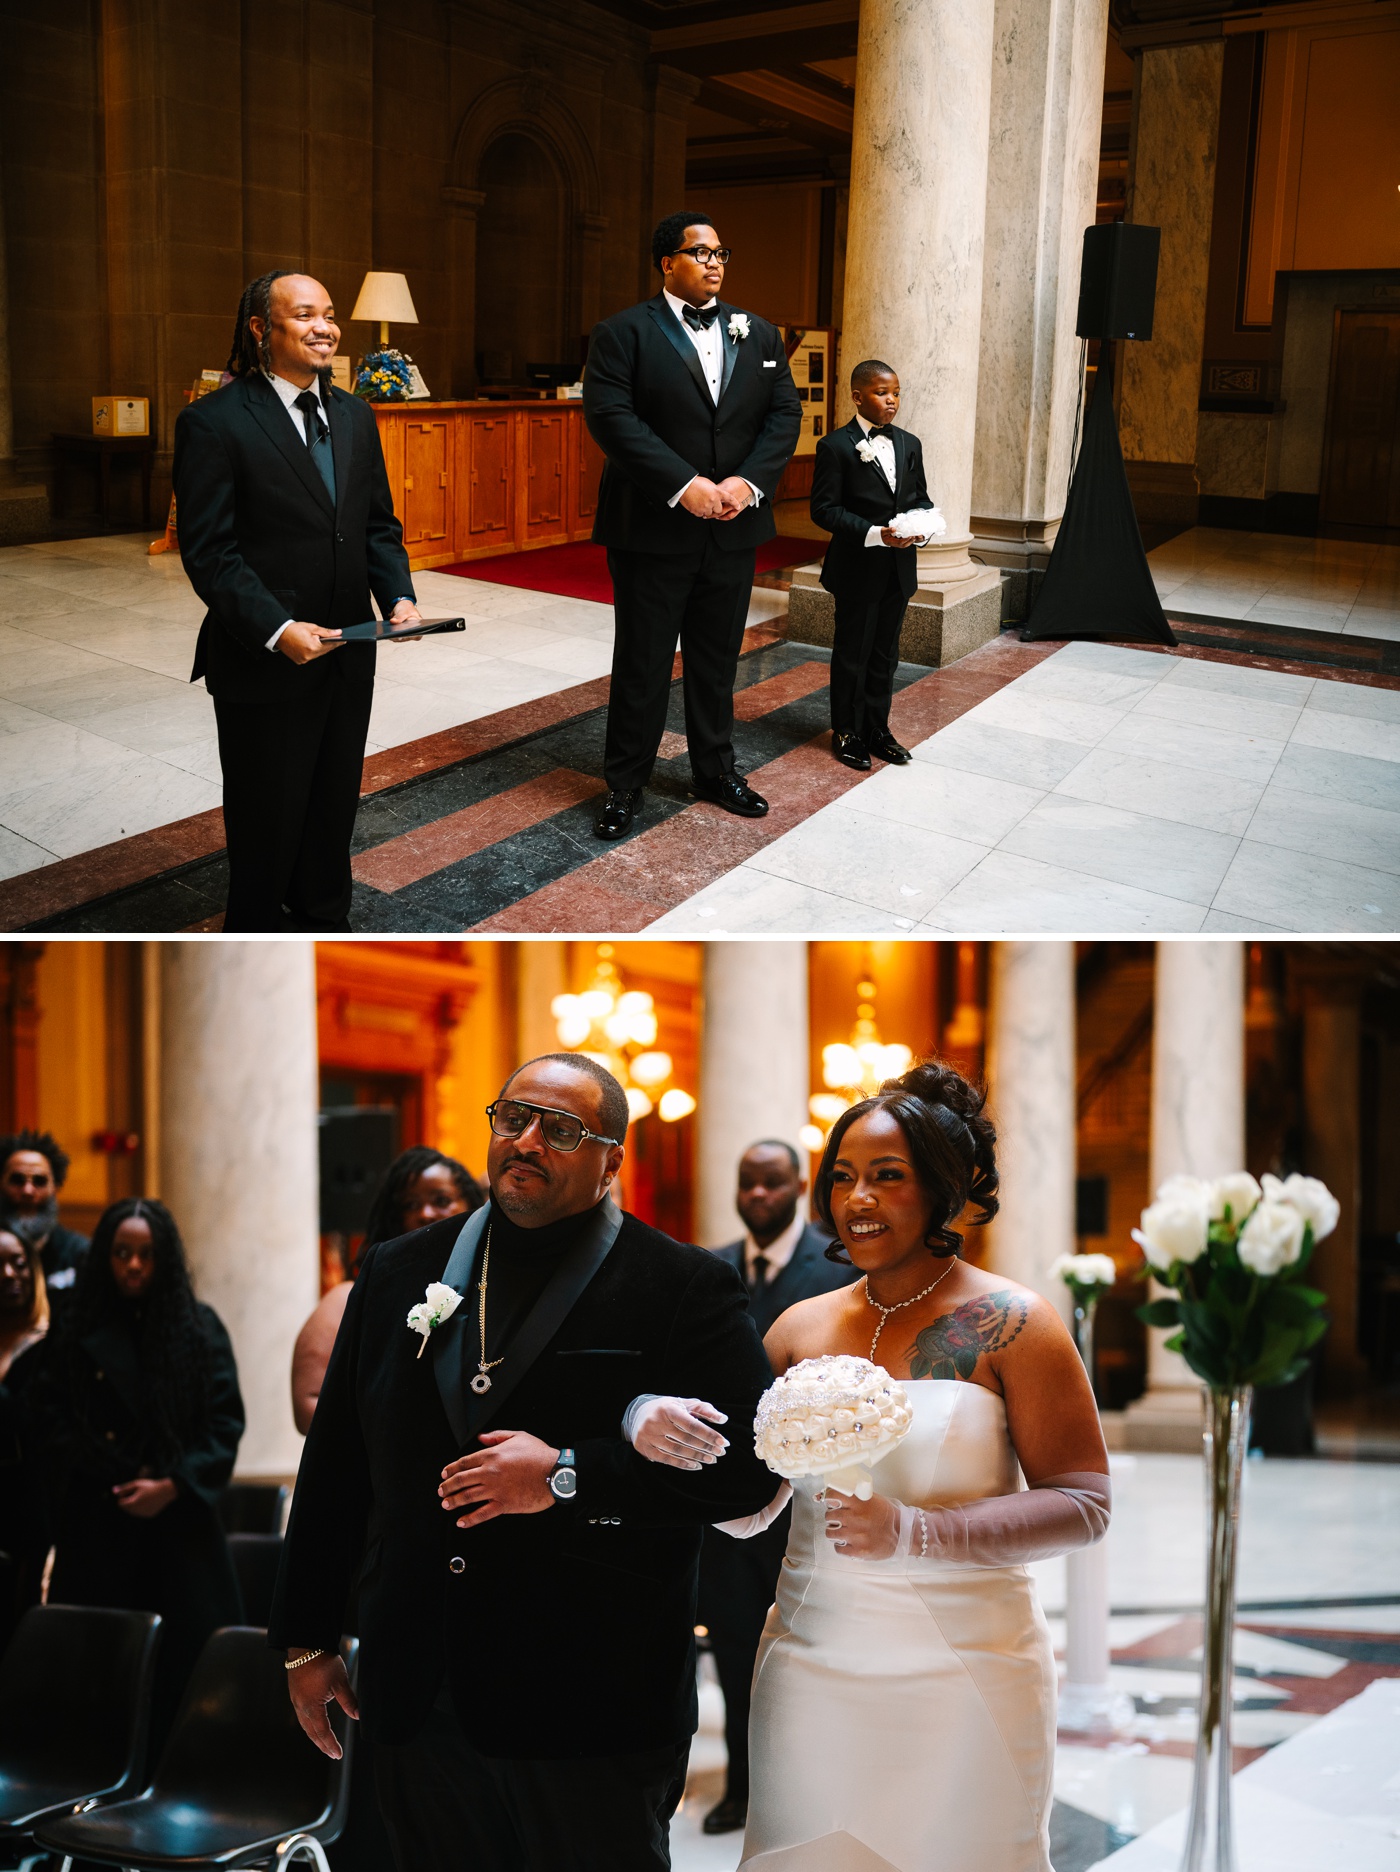 Wedding ceremony at the Indiana Statehouse